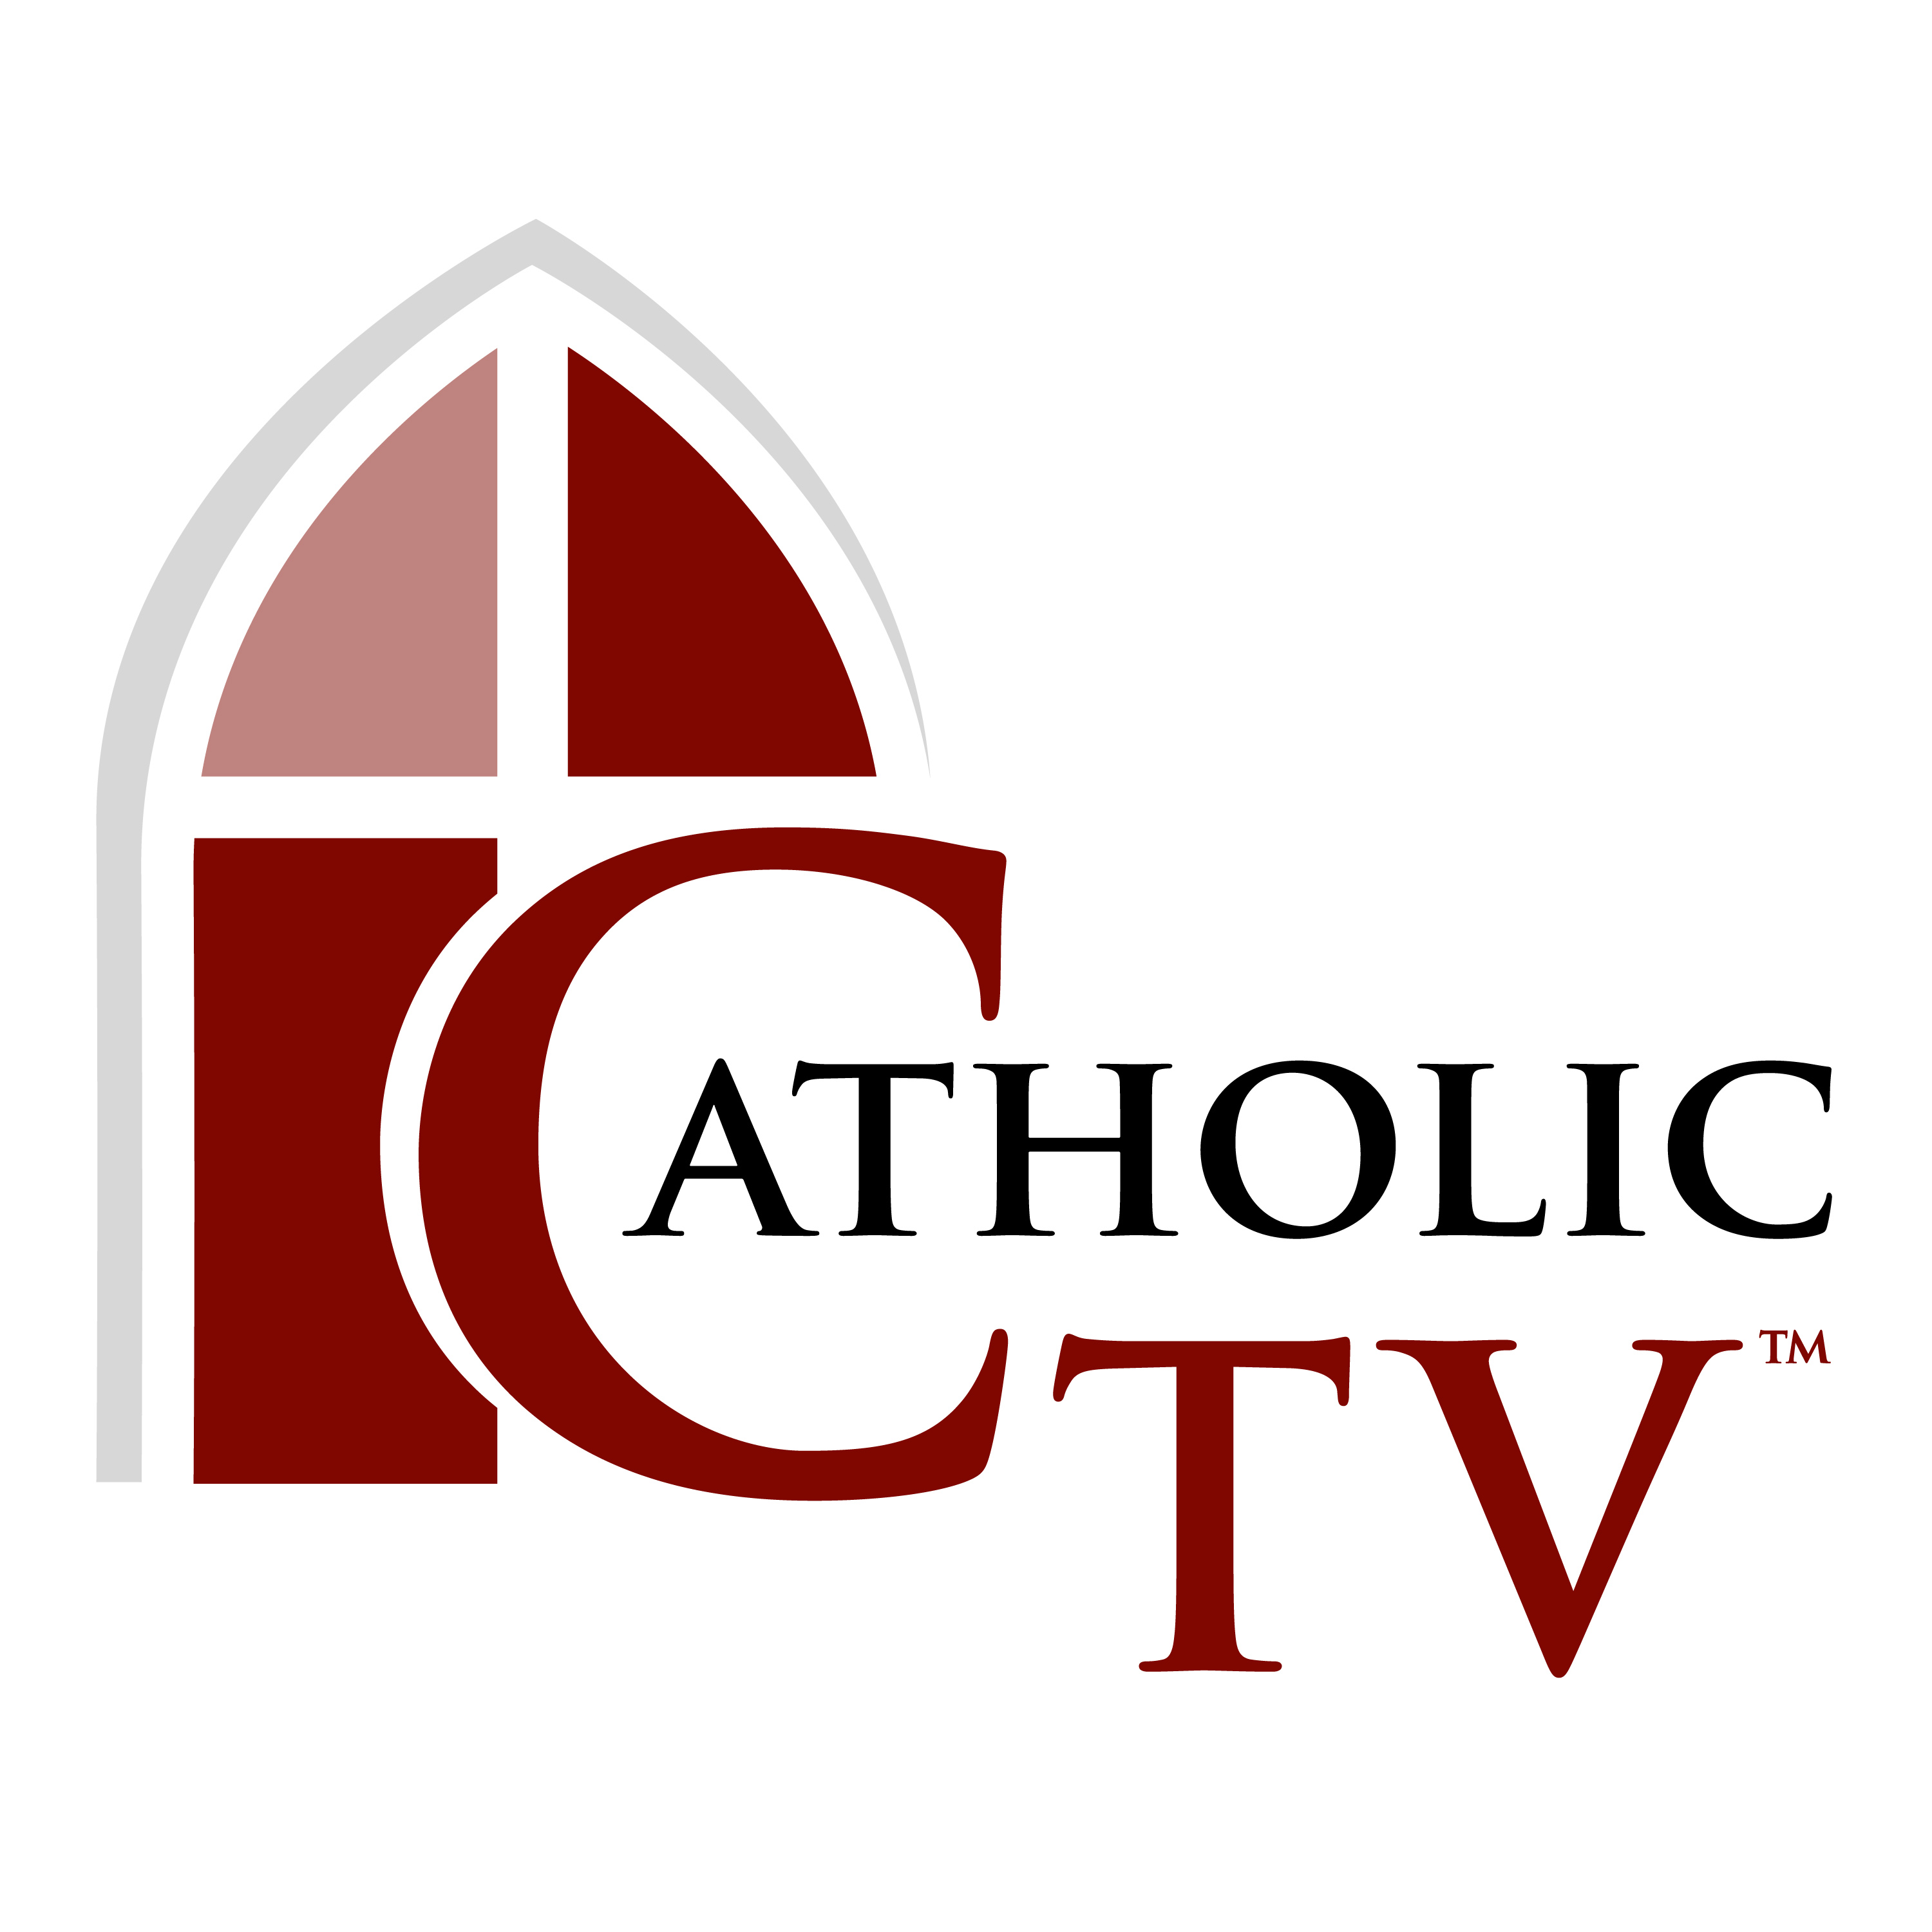 CatholicTV Network